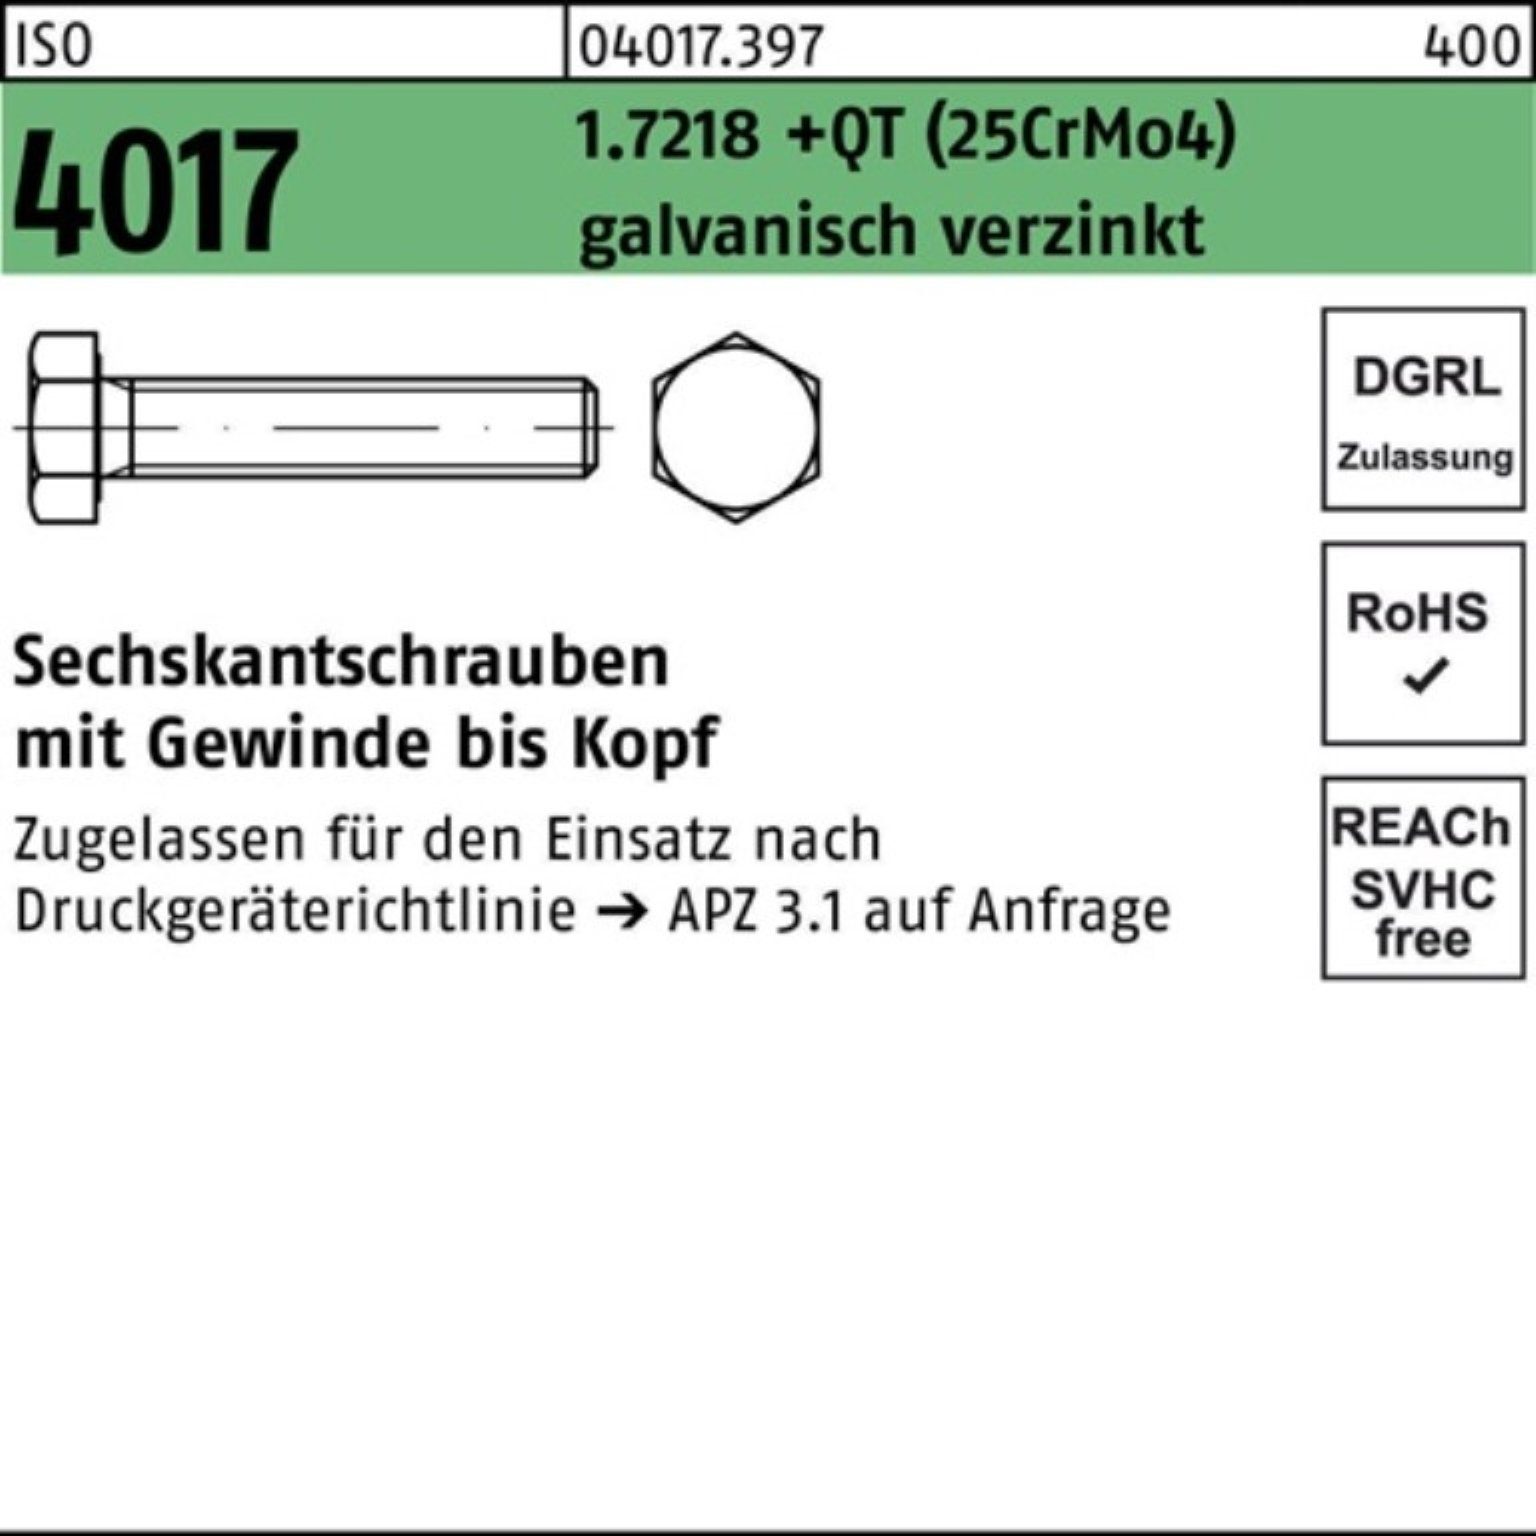 Bufab Sechskantschraube 100er Pack VG 4017 g Sechskantschraube M12x80 (25CrMo4) +QT 1.7218 ISO